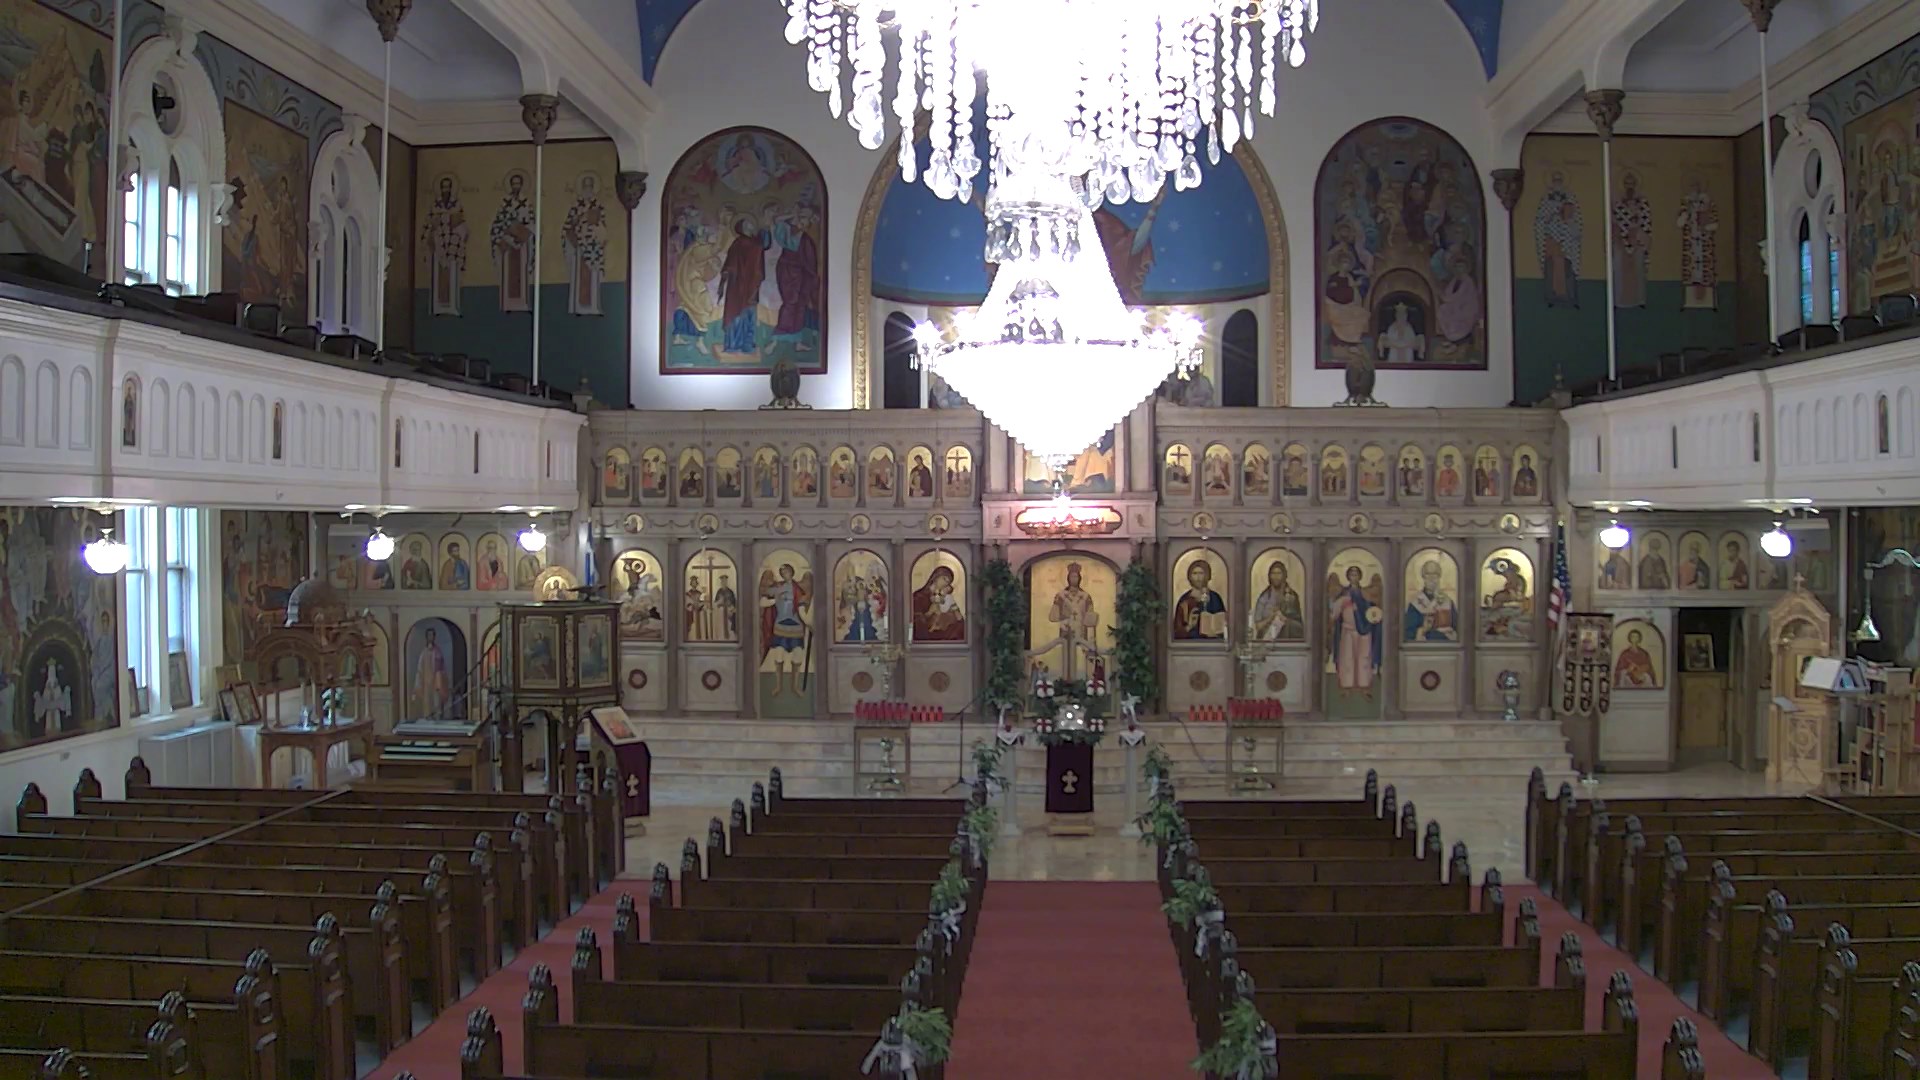 The story of the Parish of St. John the Baptist Greek Orthodox Church...